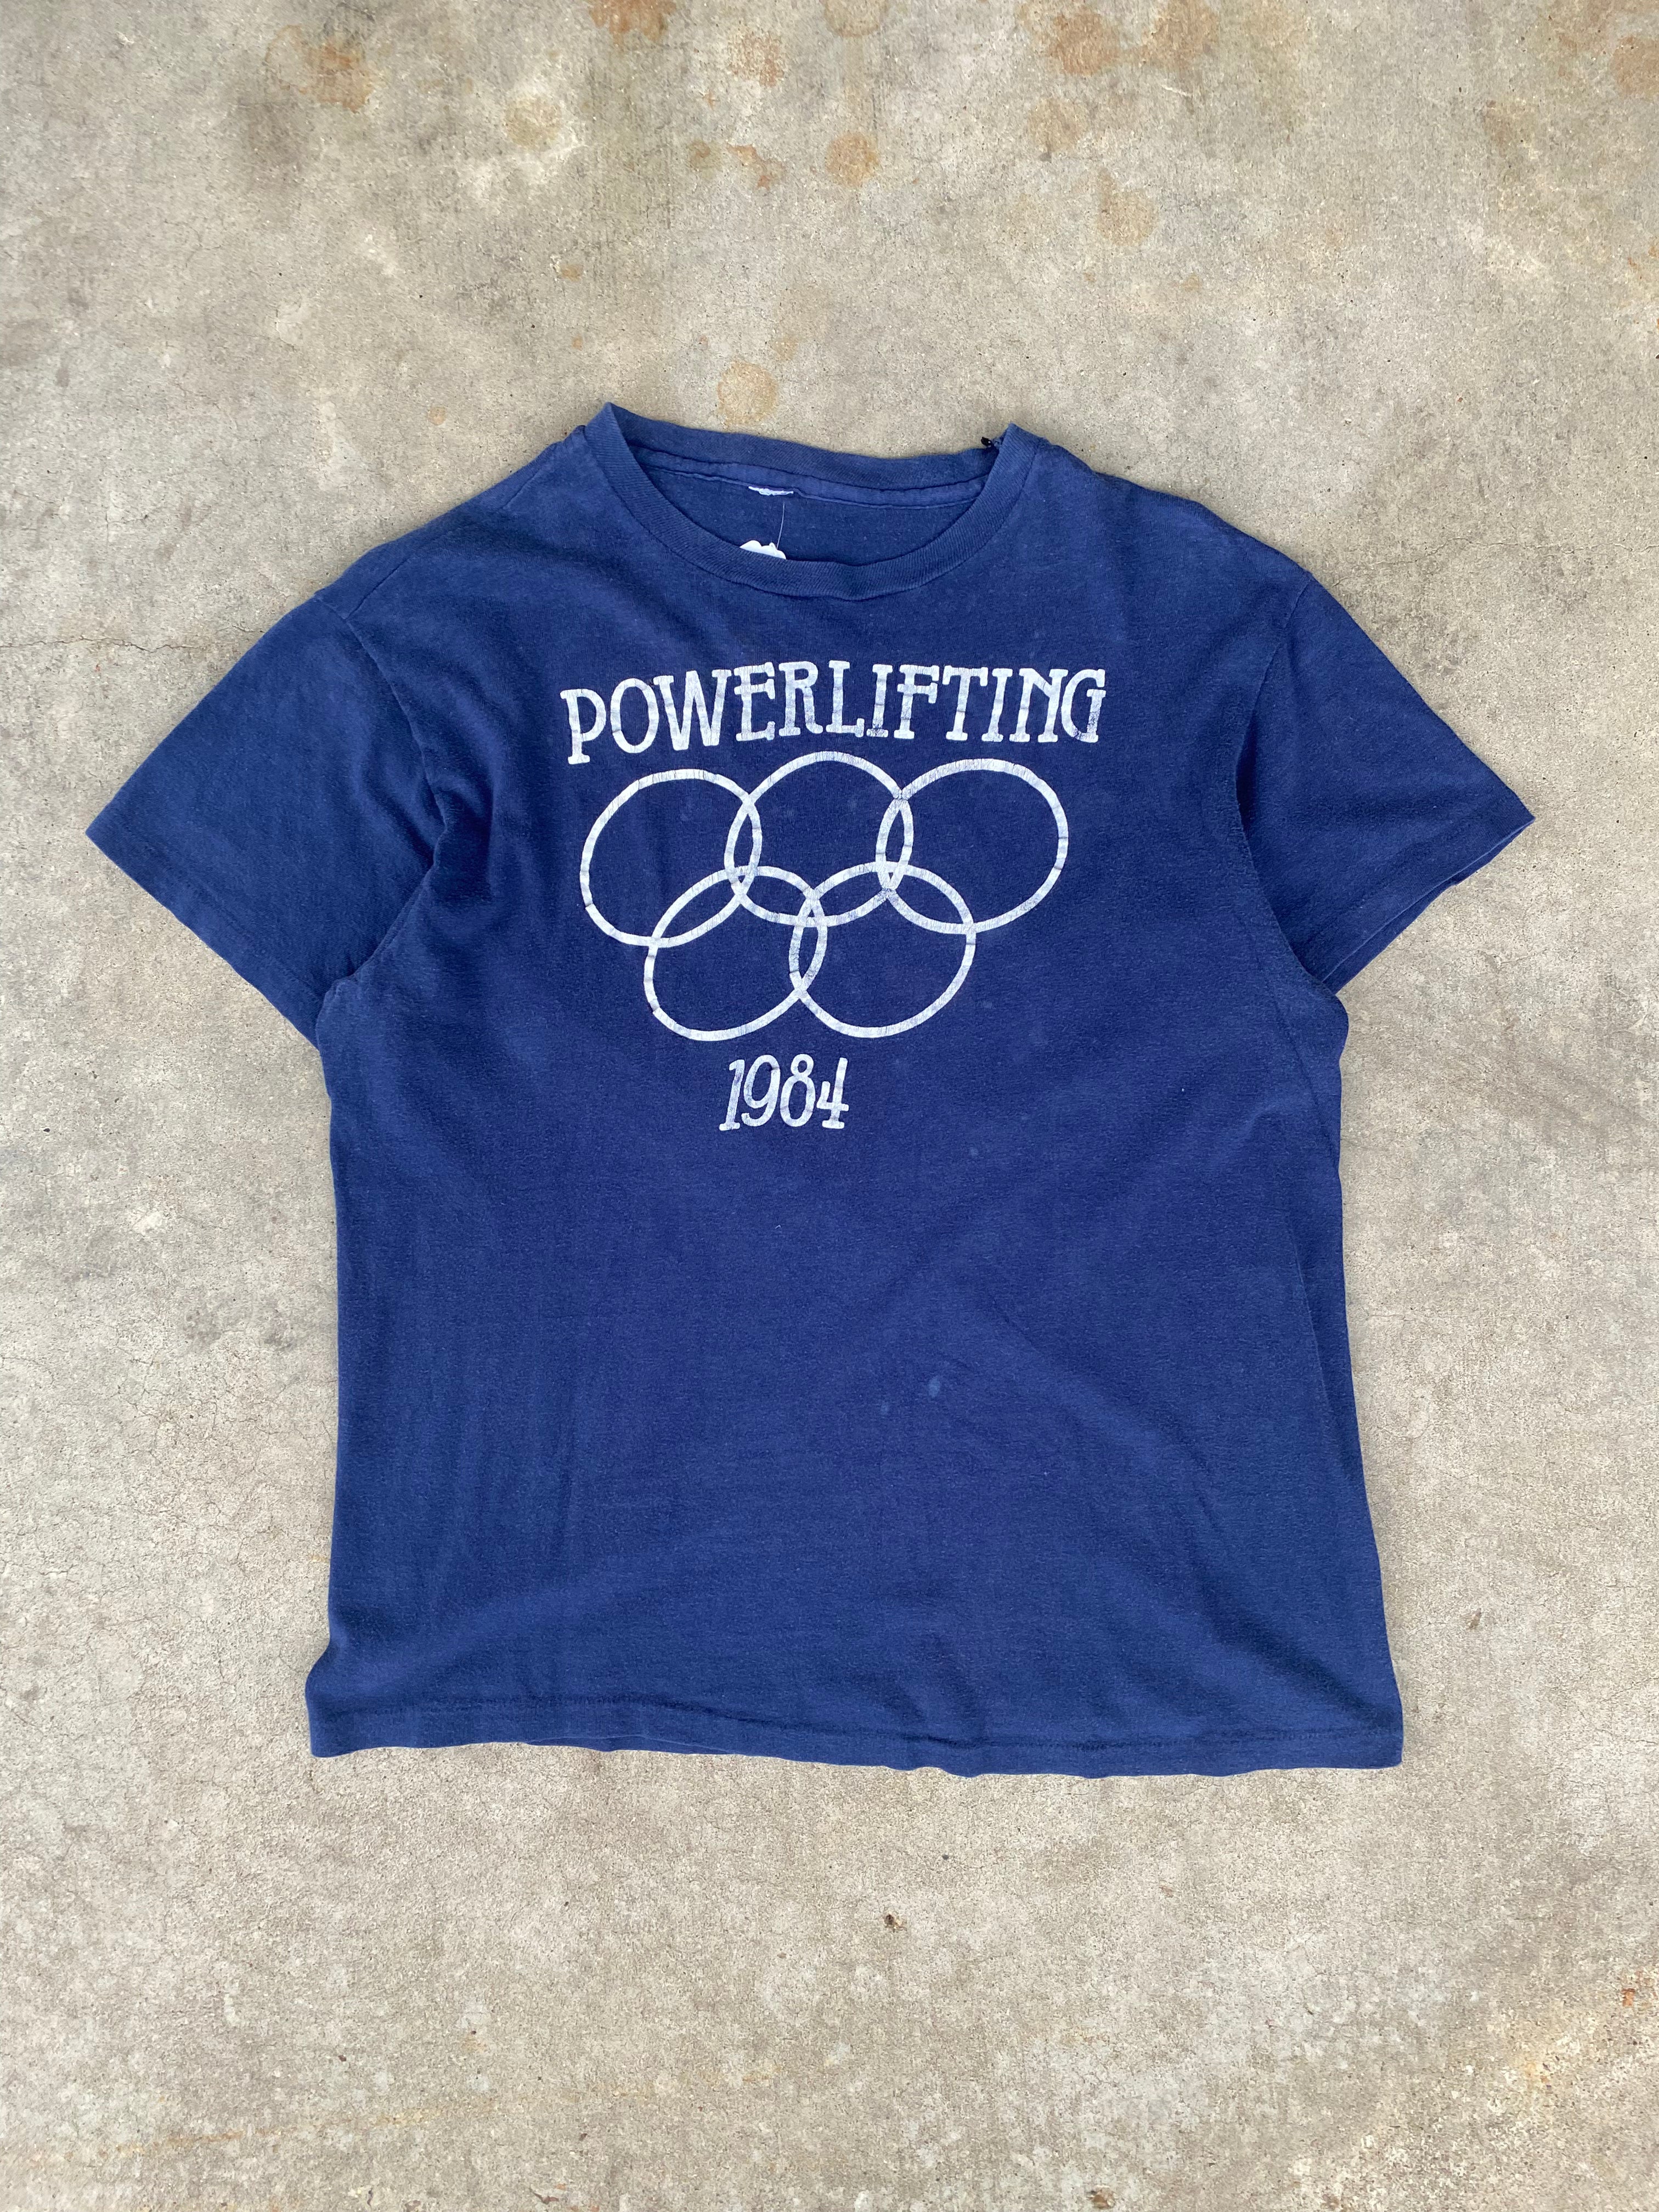 1984 Olympic Powerlifting T-Shirt (M)